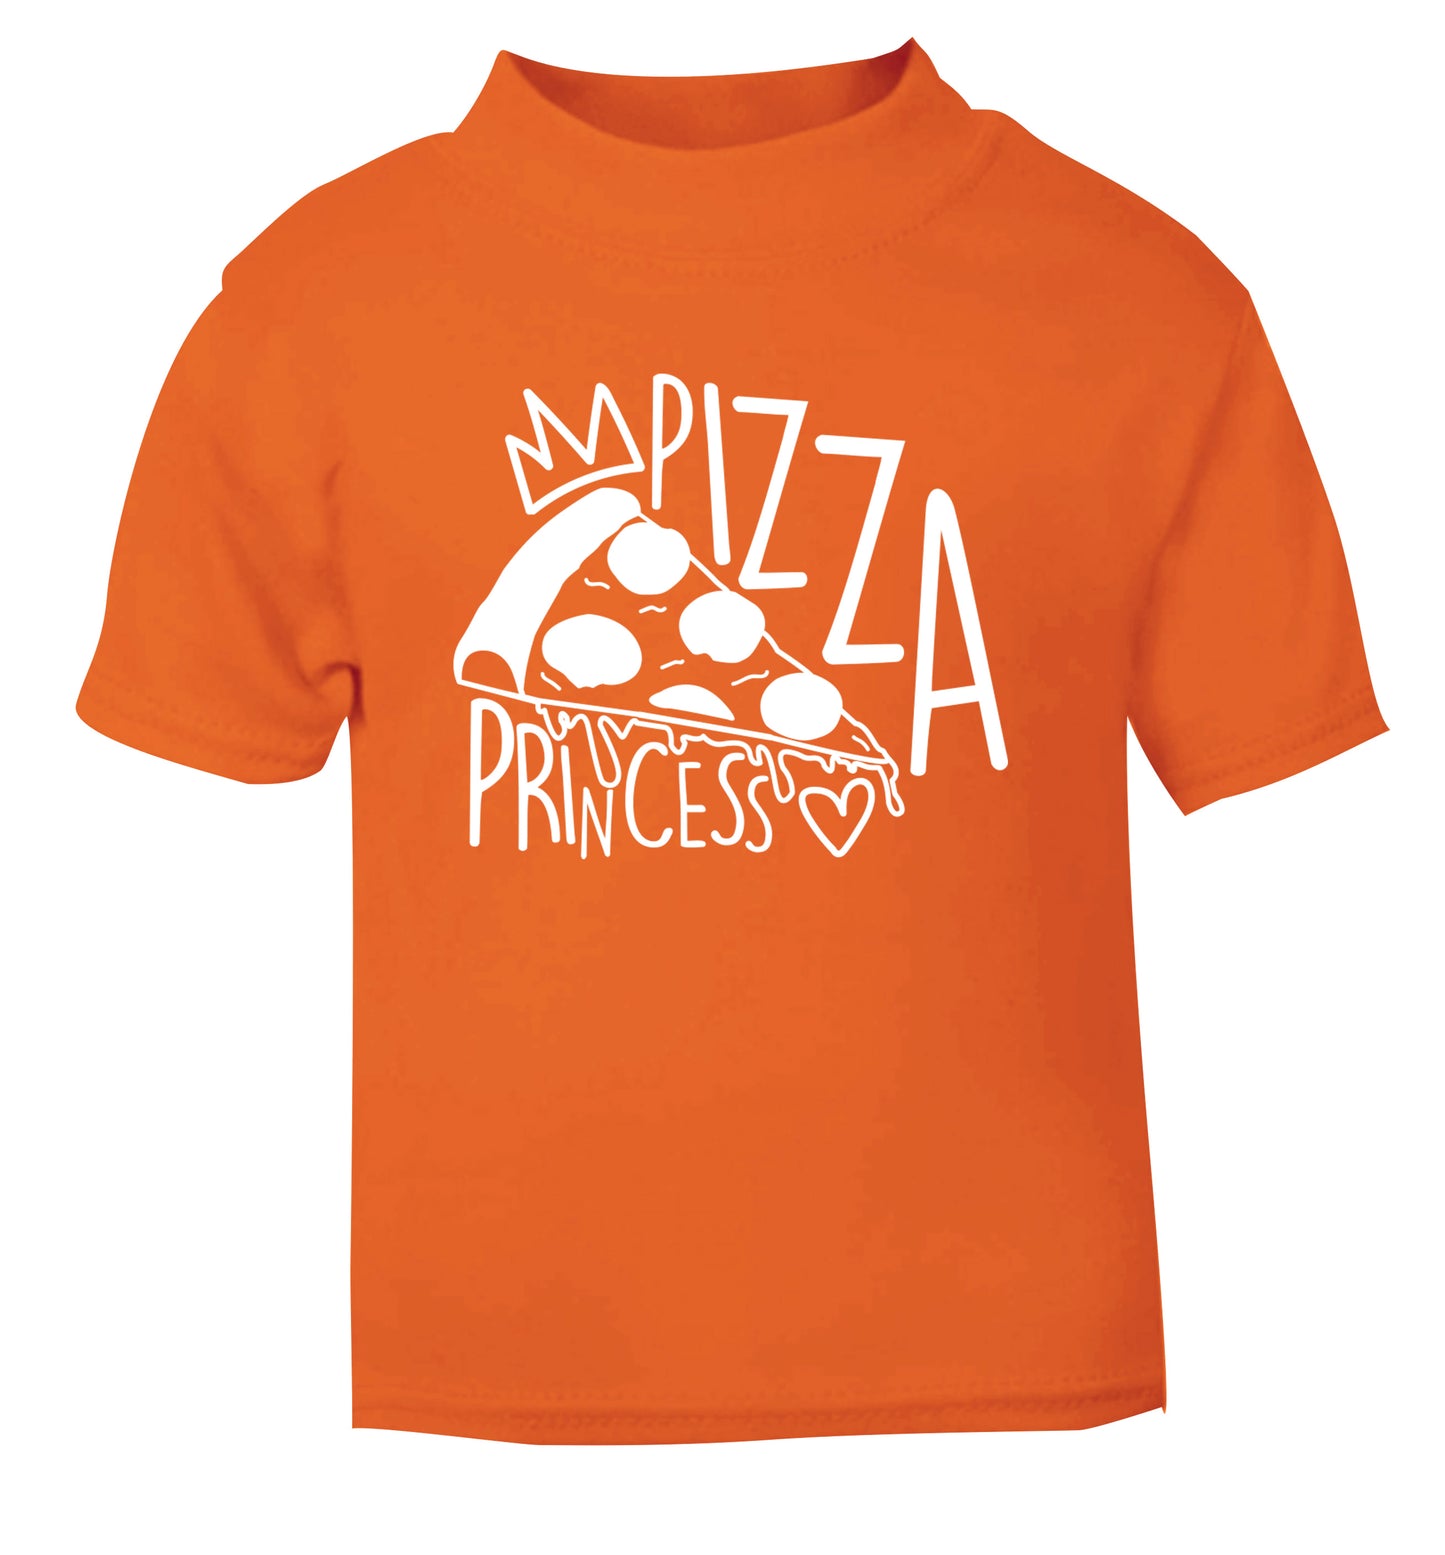 Pizza Princess orange Baby Toddler Tshirt 2 Years